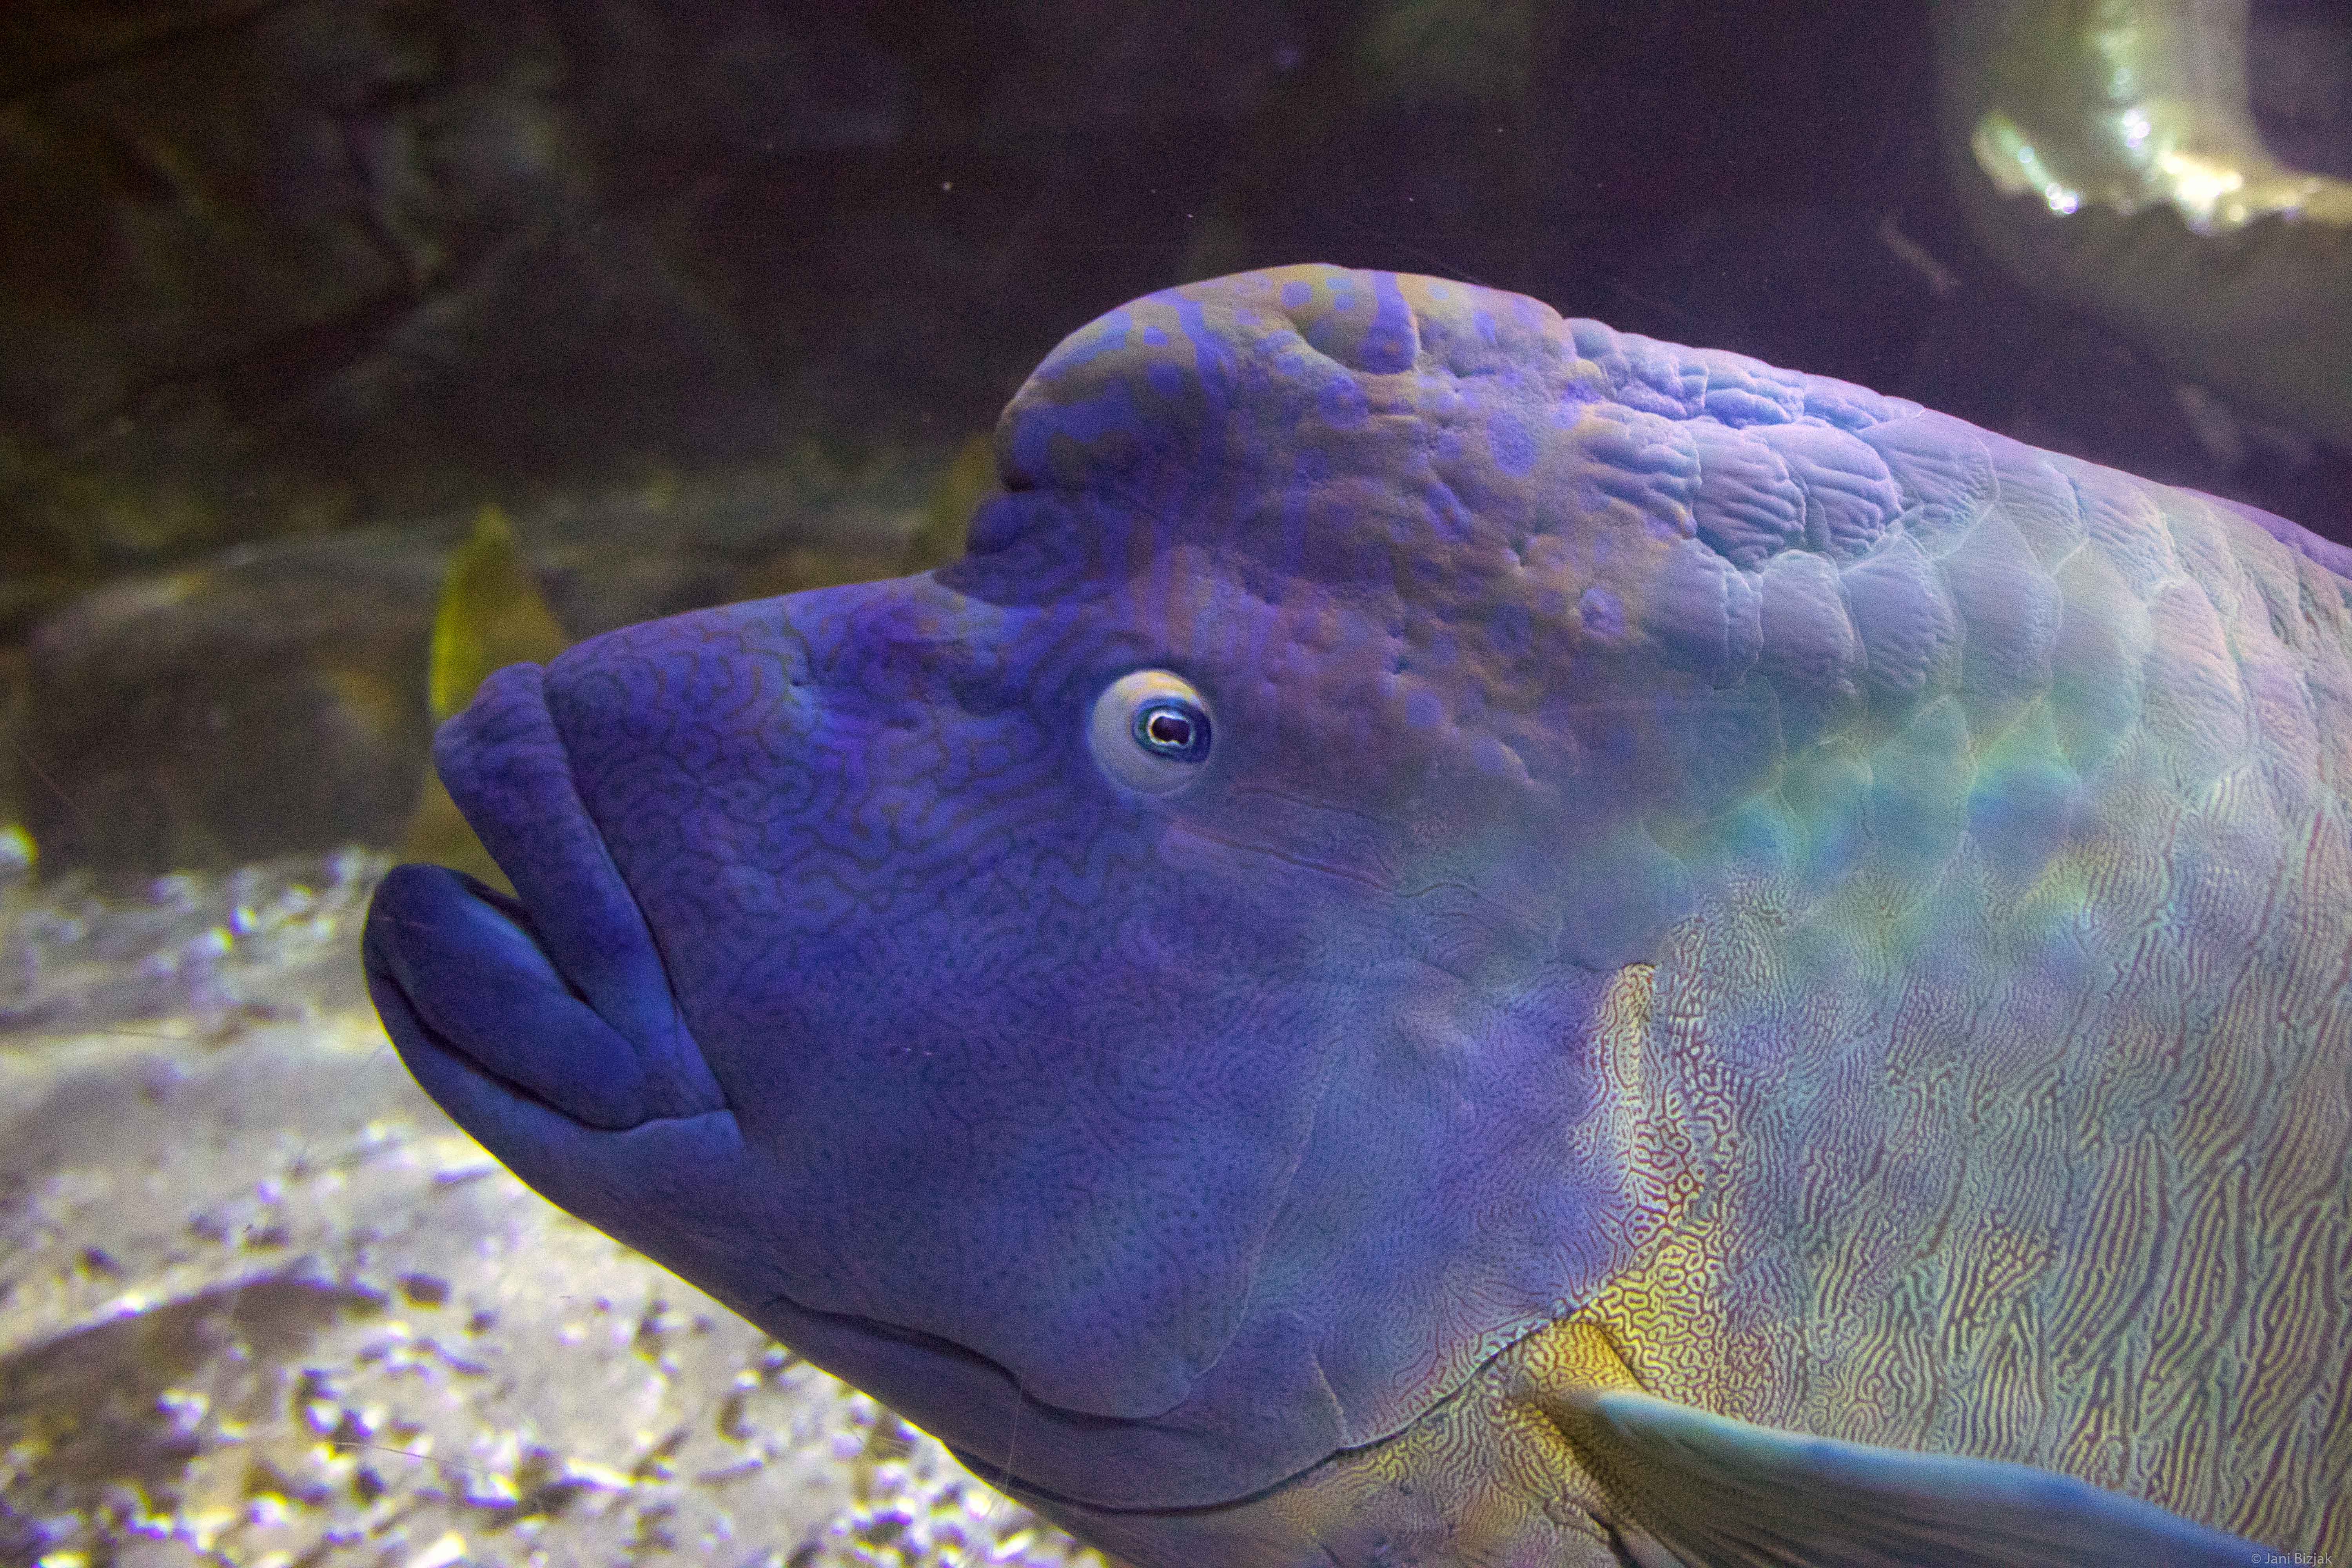 Large colourful fish